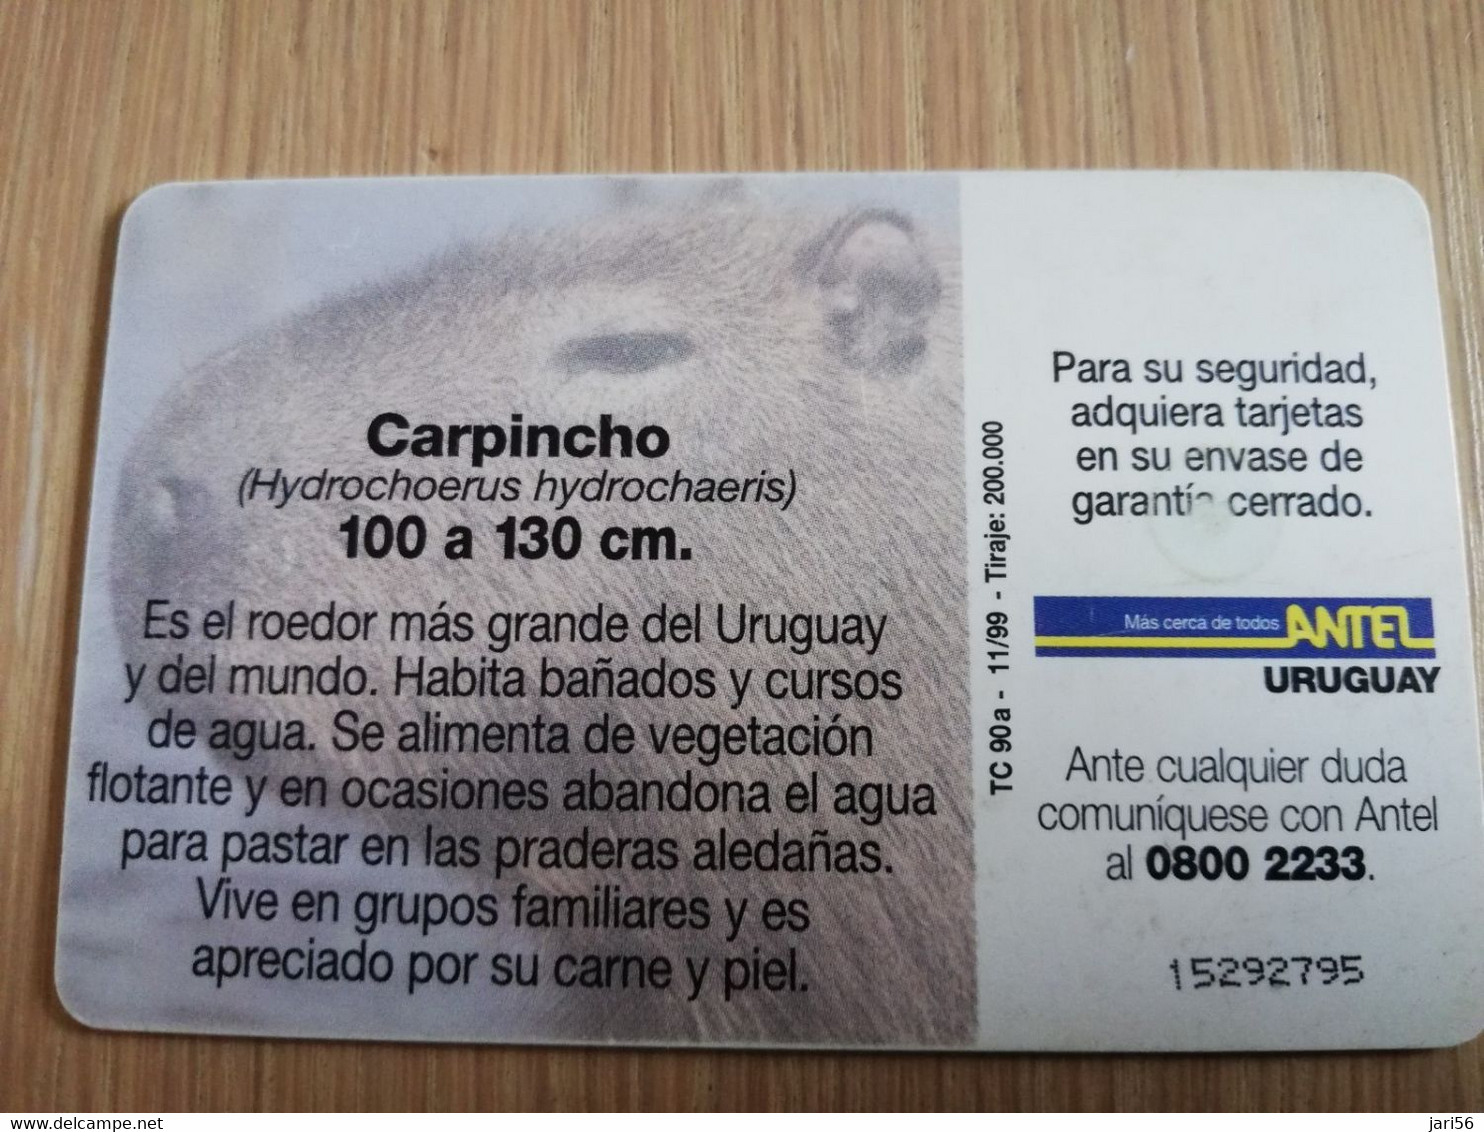 URUGUAY CHIPCARD  ANIMAL    $5  CAPINCHO          Nice Used Card    **4551** - Uruguay